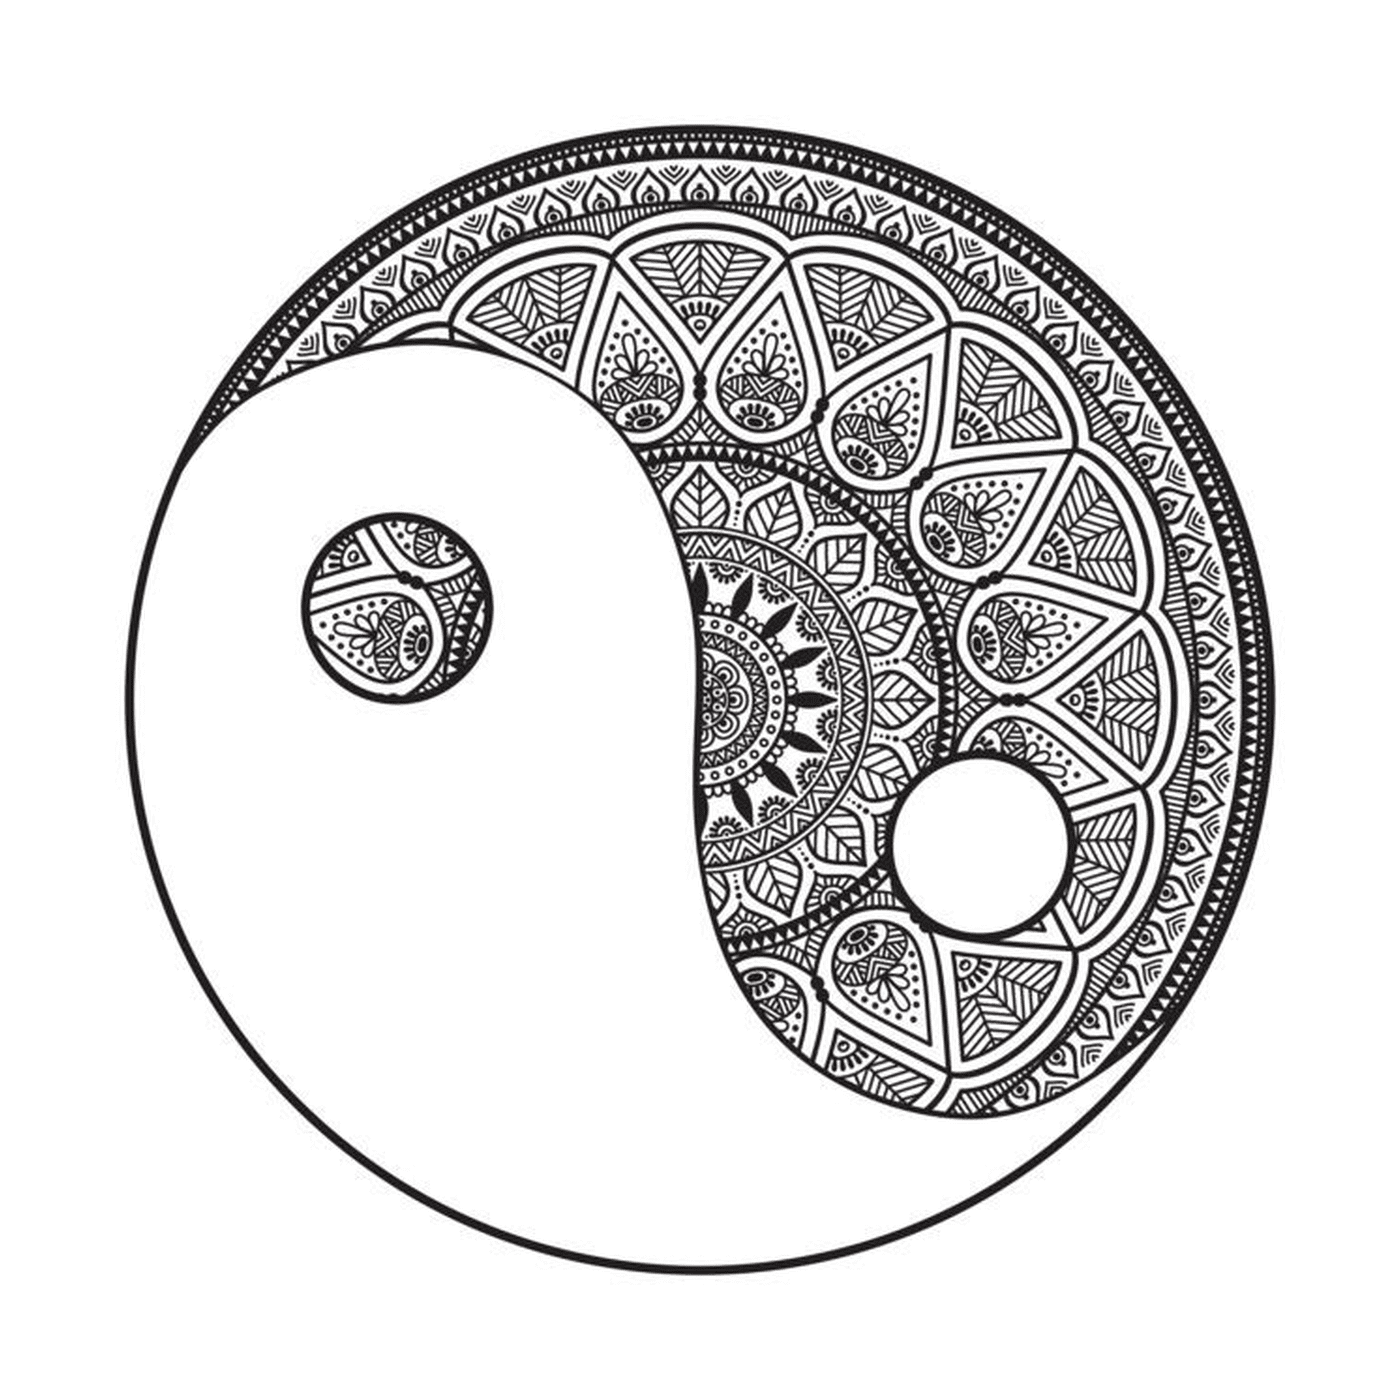  Yin and yang in a mandala 